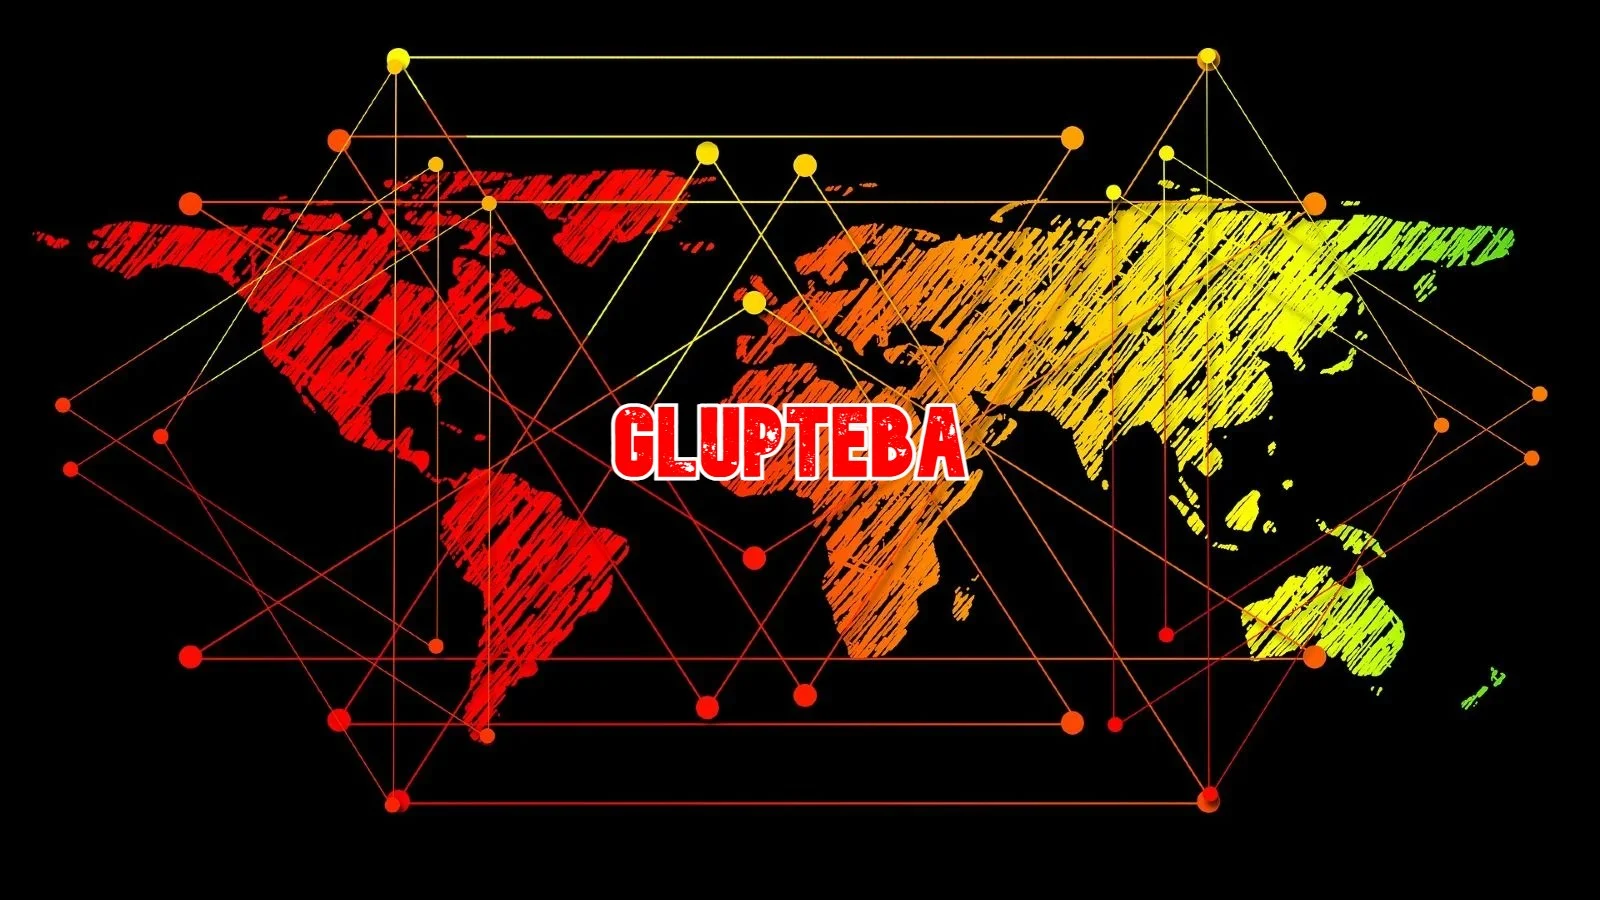 takian.ir glupteba malware is back in action after google disruption 1